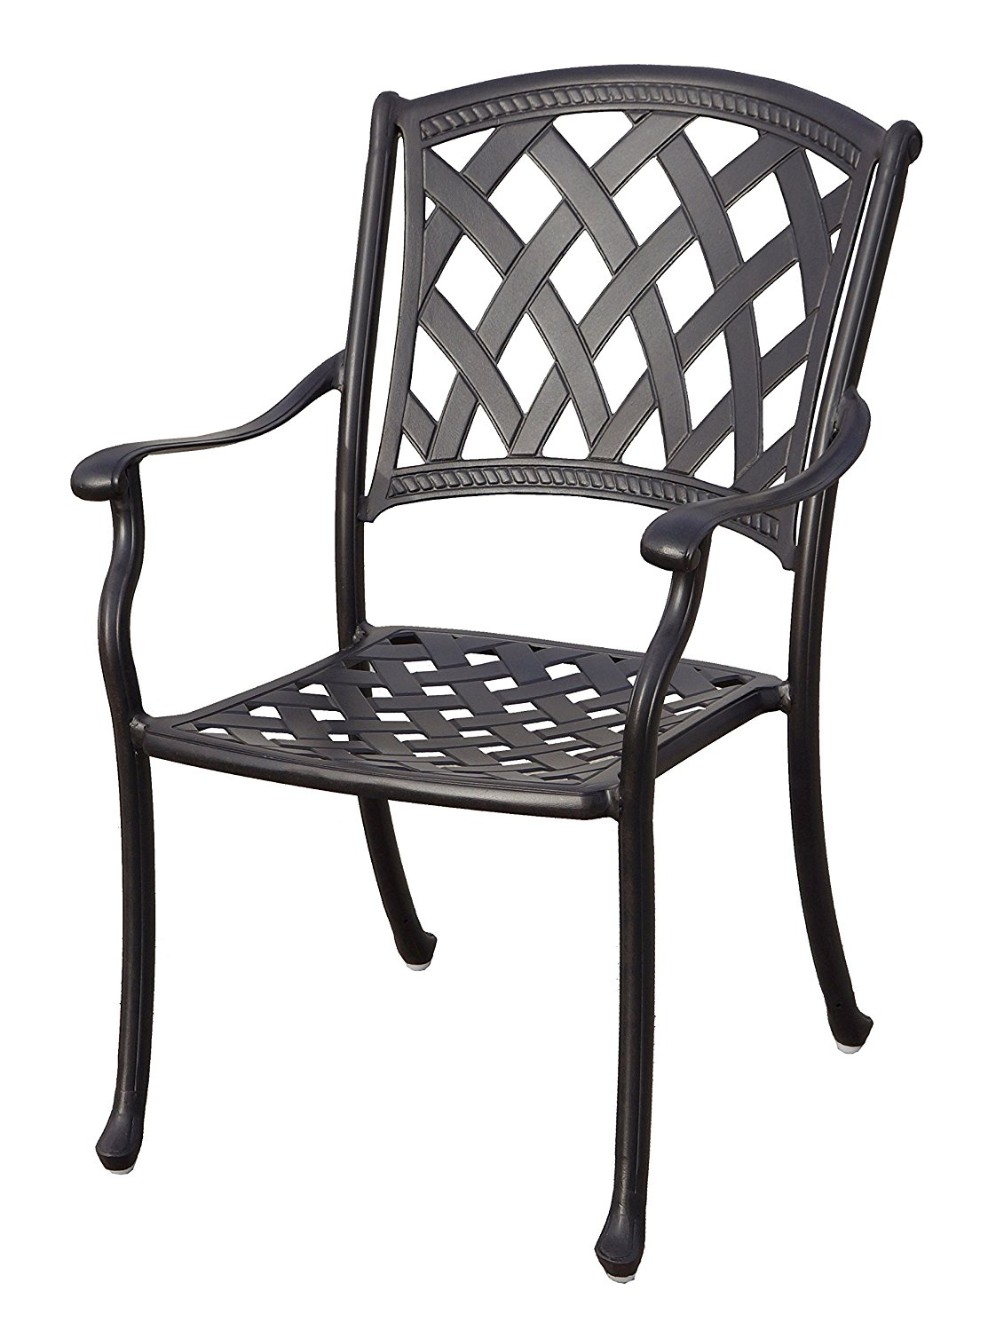 Outdoor Modern Black Cast Aluminum Patio Garden Dining Chairs - Buy